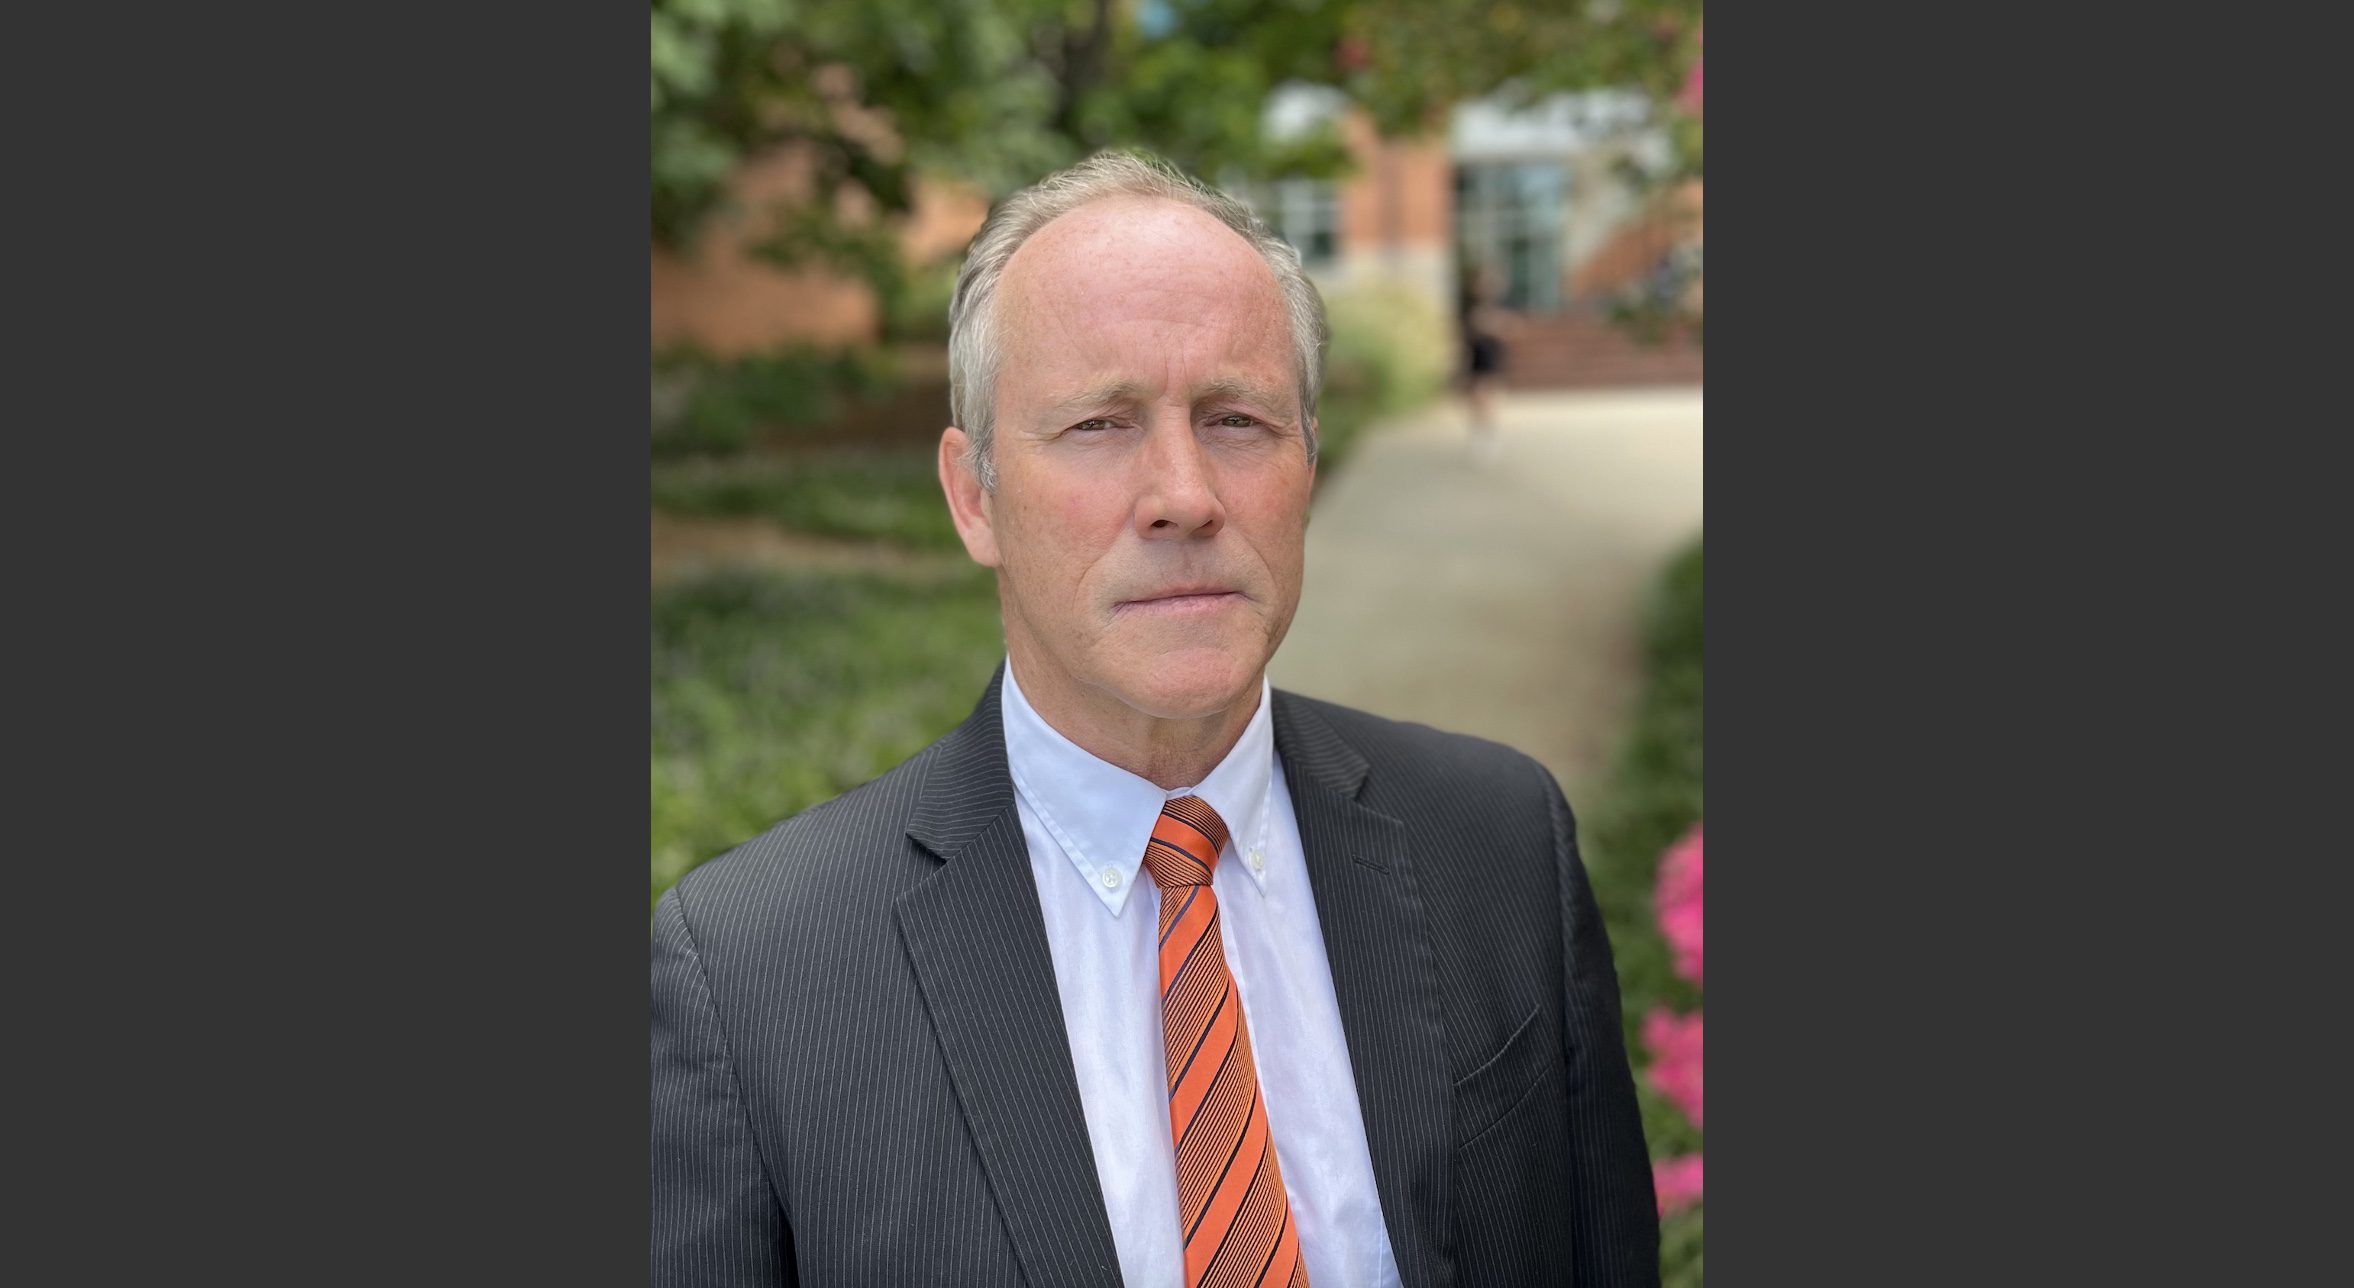 Professional man in grey suit and orange tie standing in front of university buildiing.